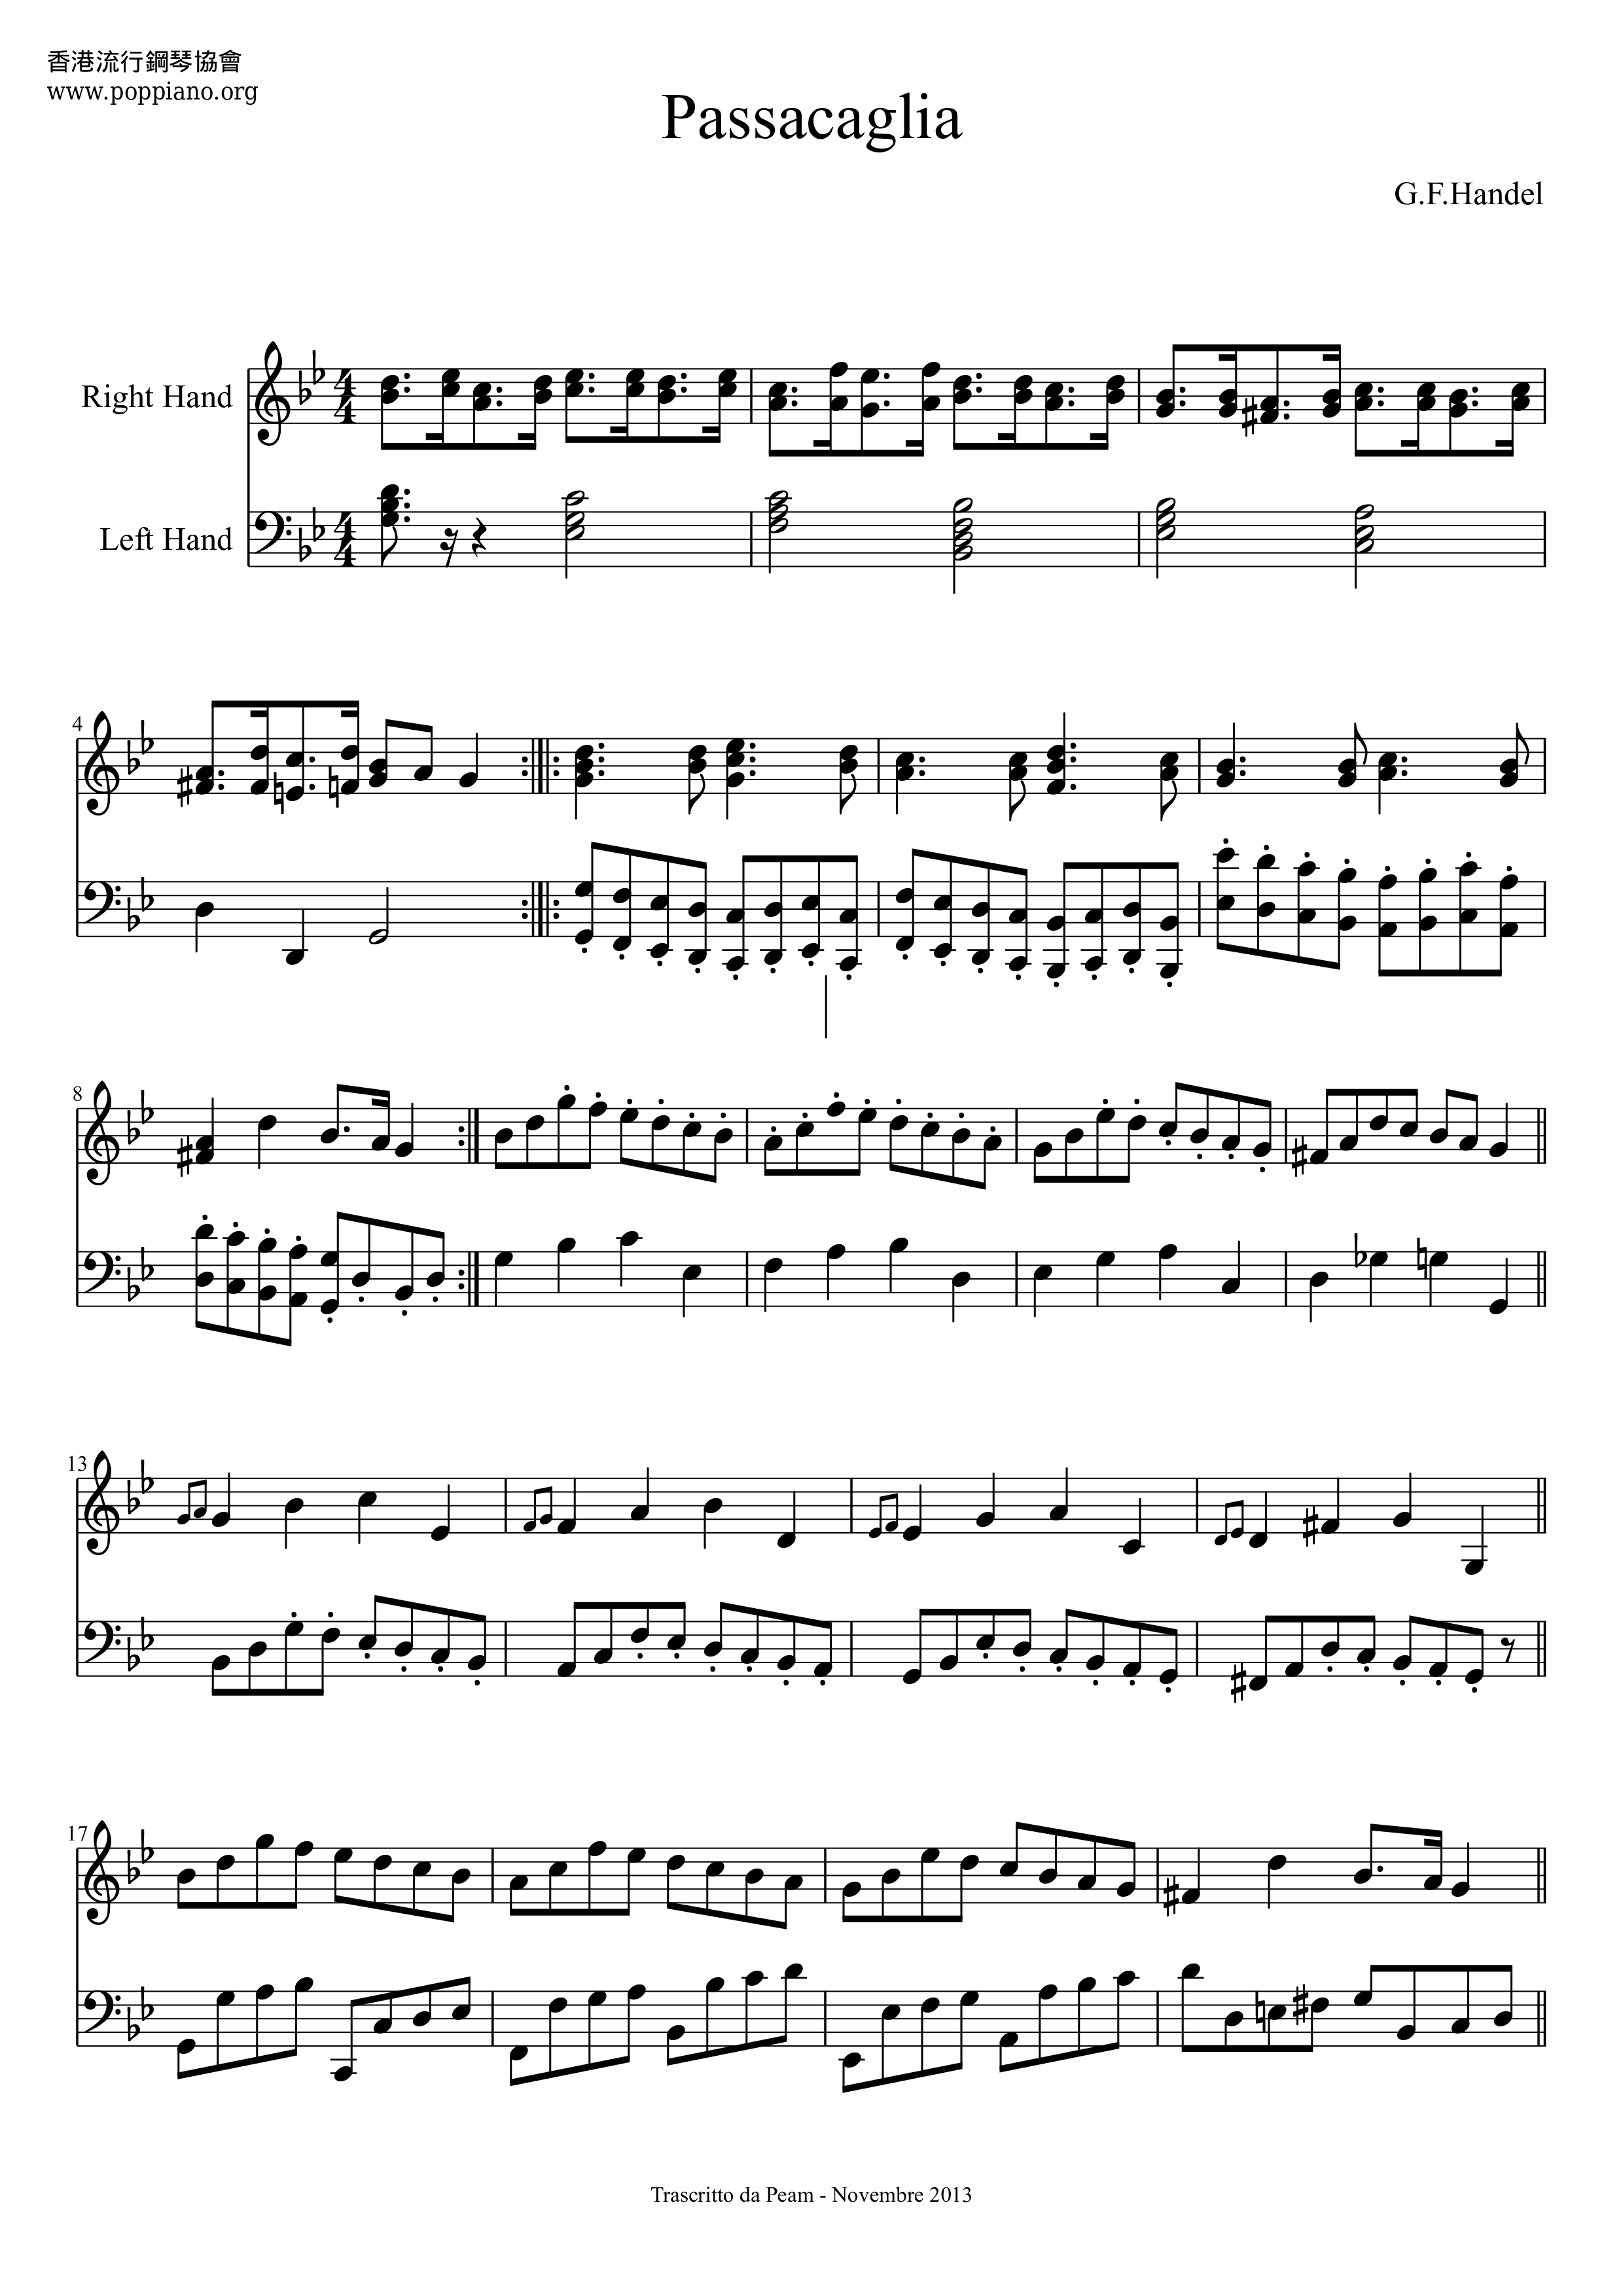 Passacagliaピアノ譜